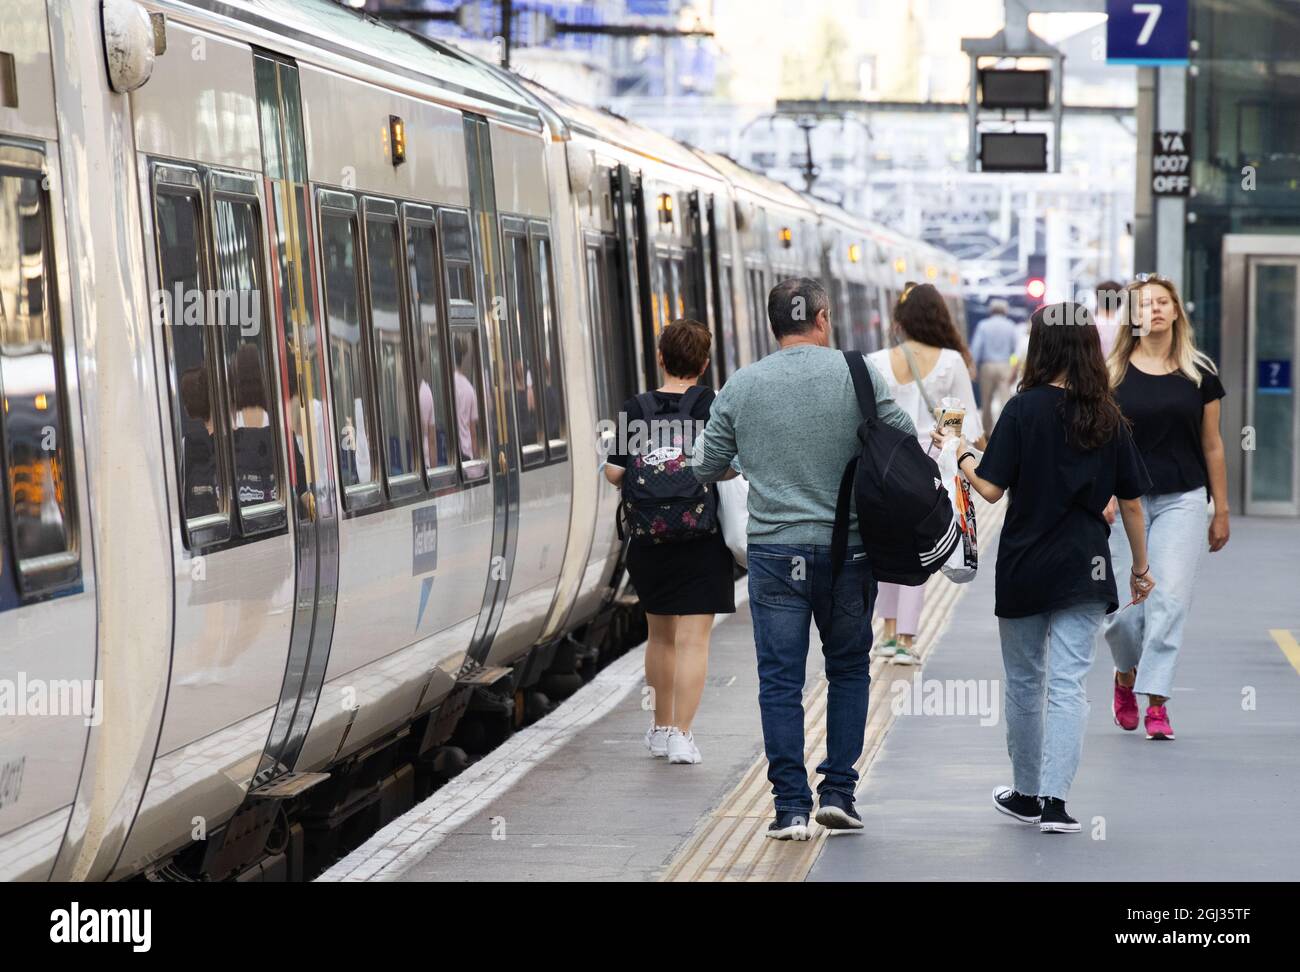 Public transport Uk - Rail travel UK; Passengers catching a train on the platform, Kings Cross Railway Station, London UK Stock Photo